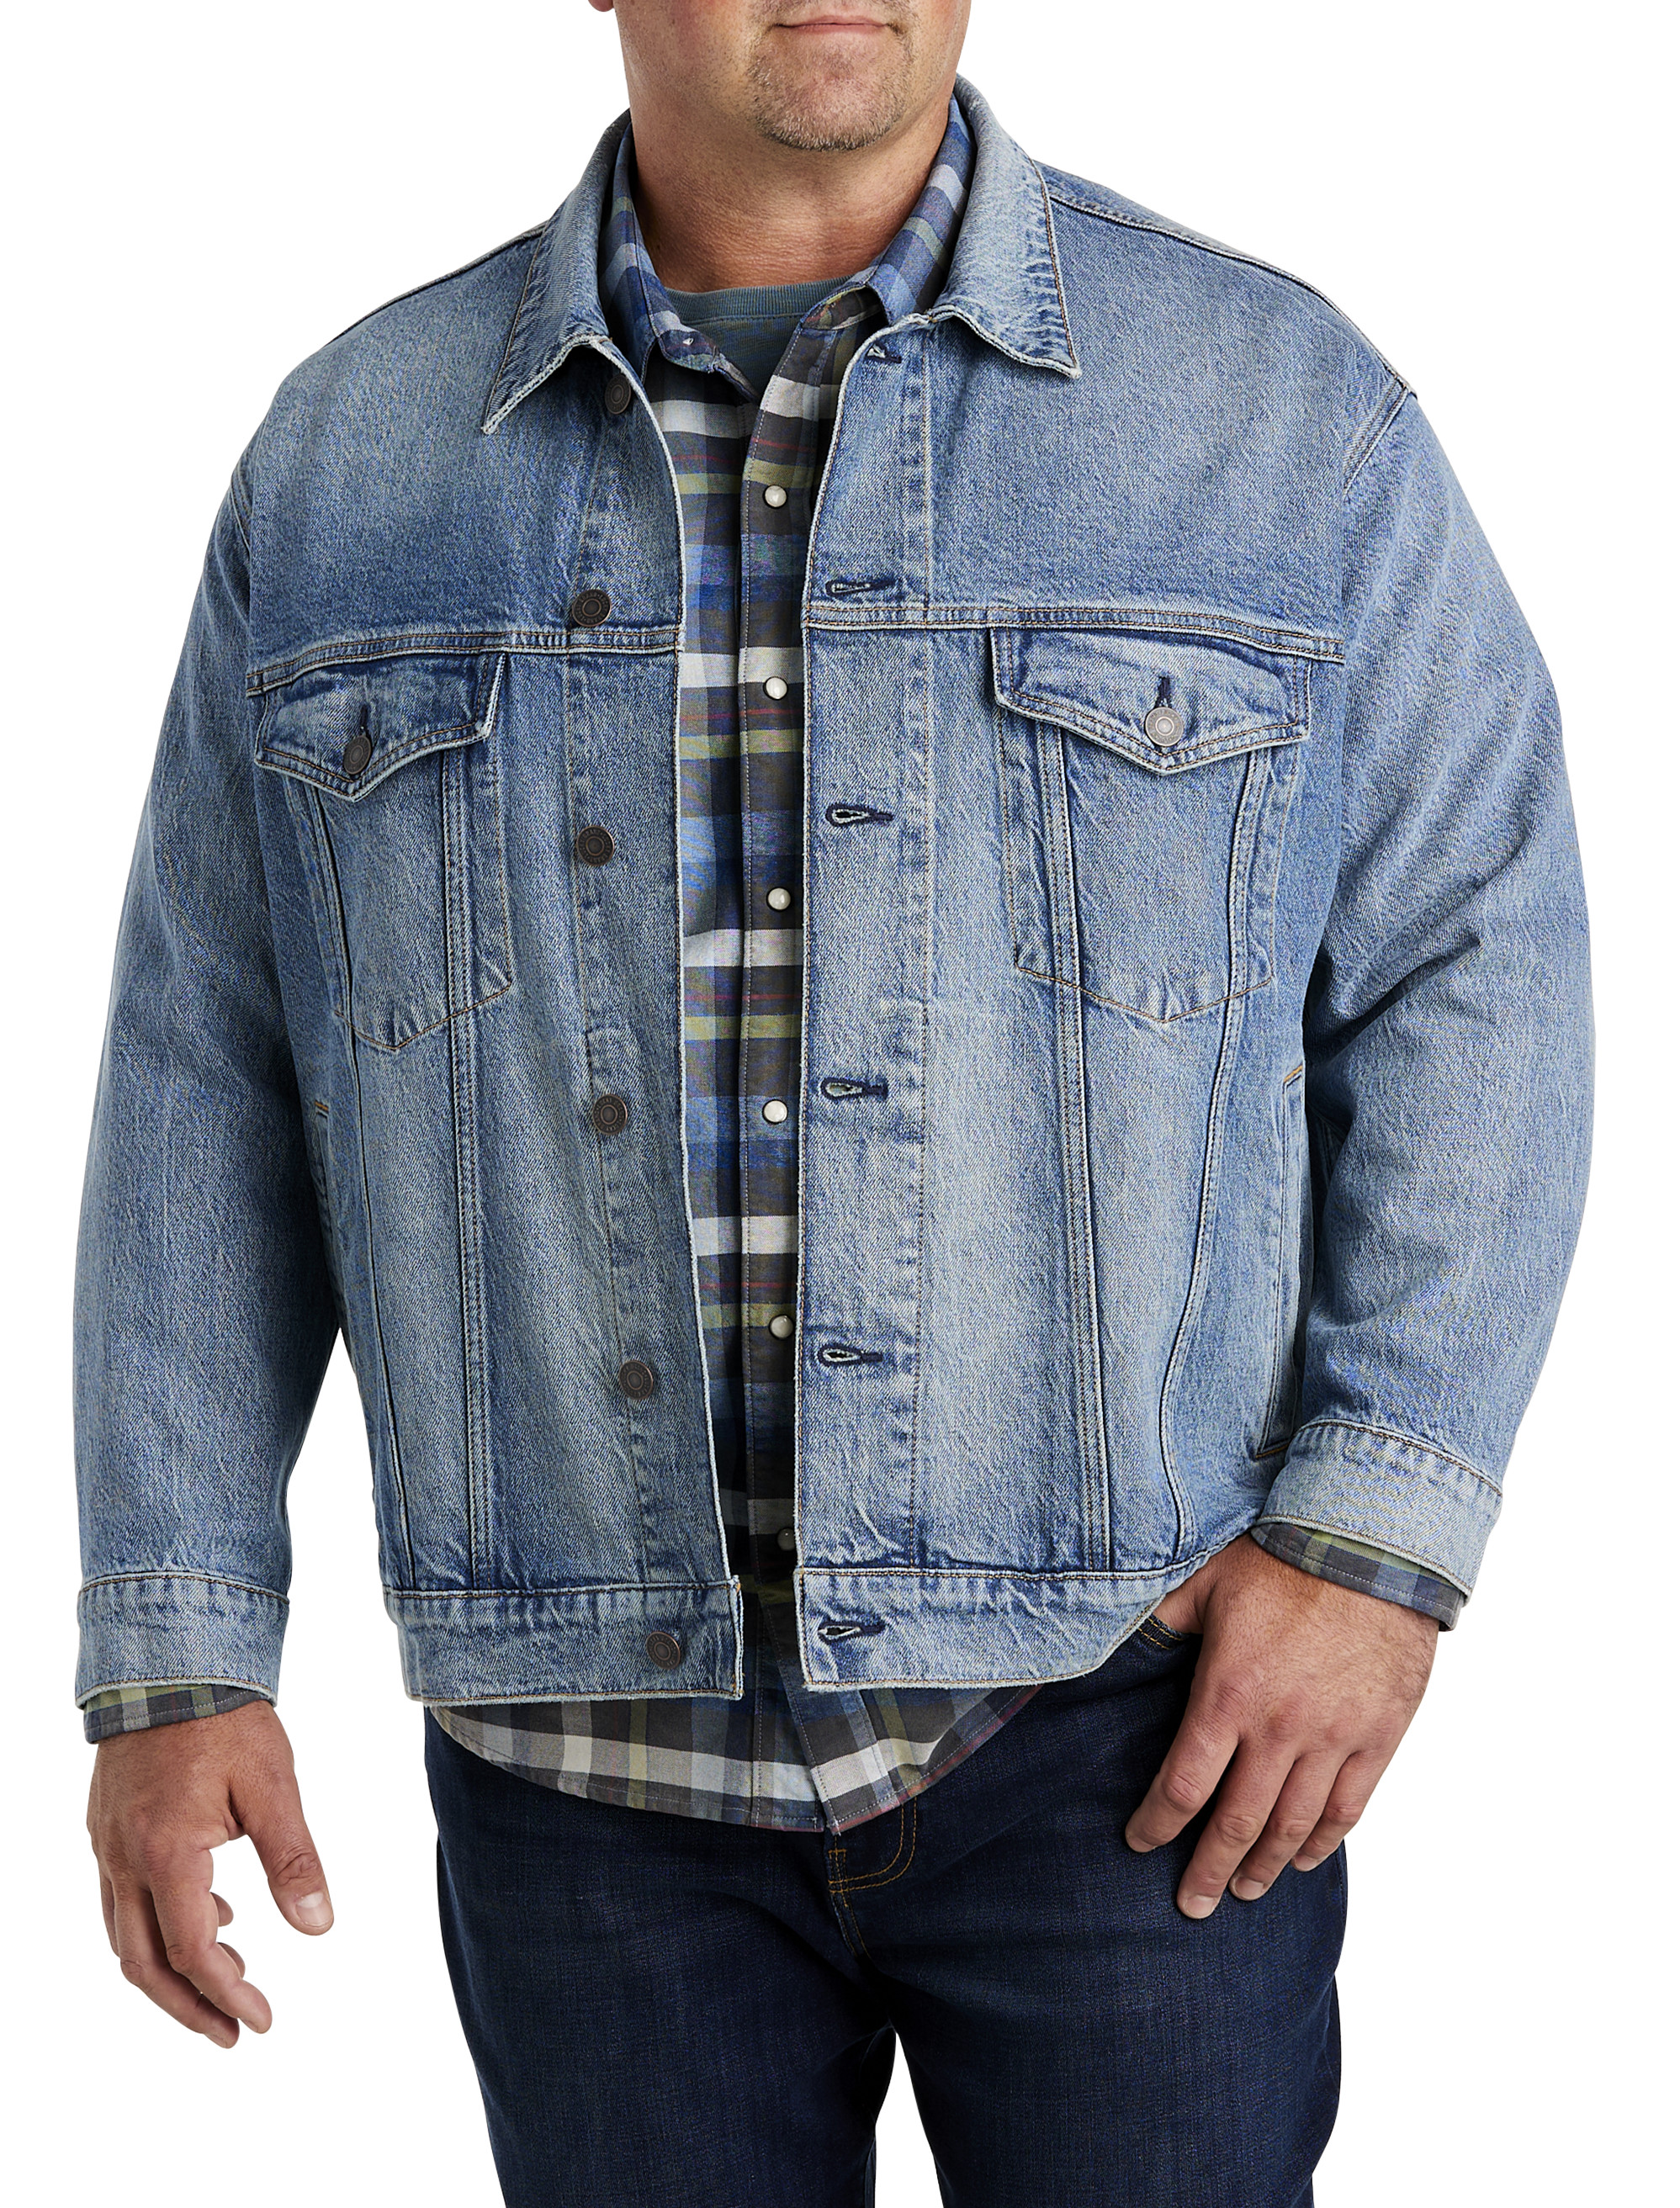 2019 Free Fashion Casual Slim Mens Denim Jacket Plus Size 4XL Bomber Jacket  Men High Quality Cowboy Mens Jean Jacket From Xj999888, $5.08